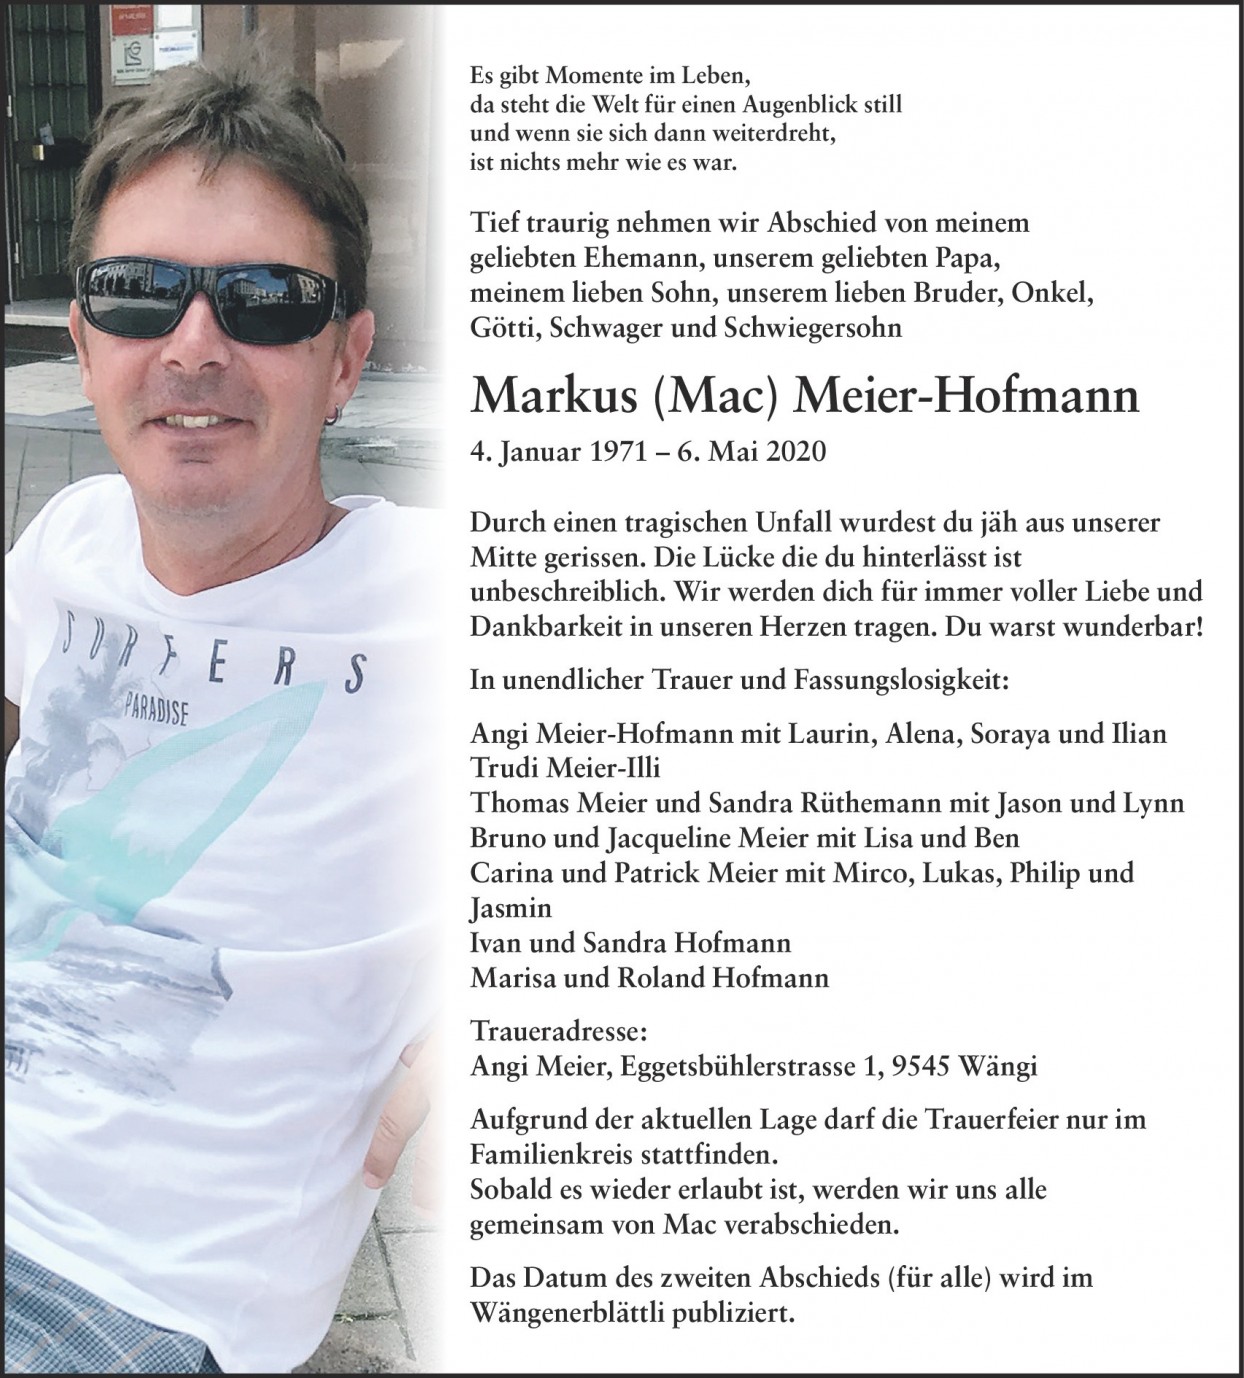 Markus Meier-Hofmann